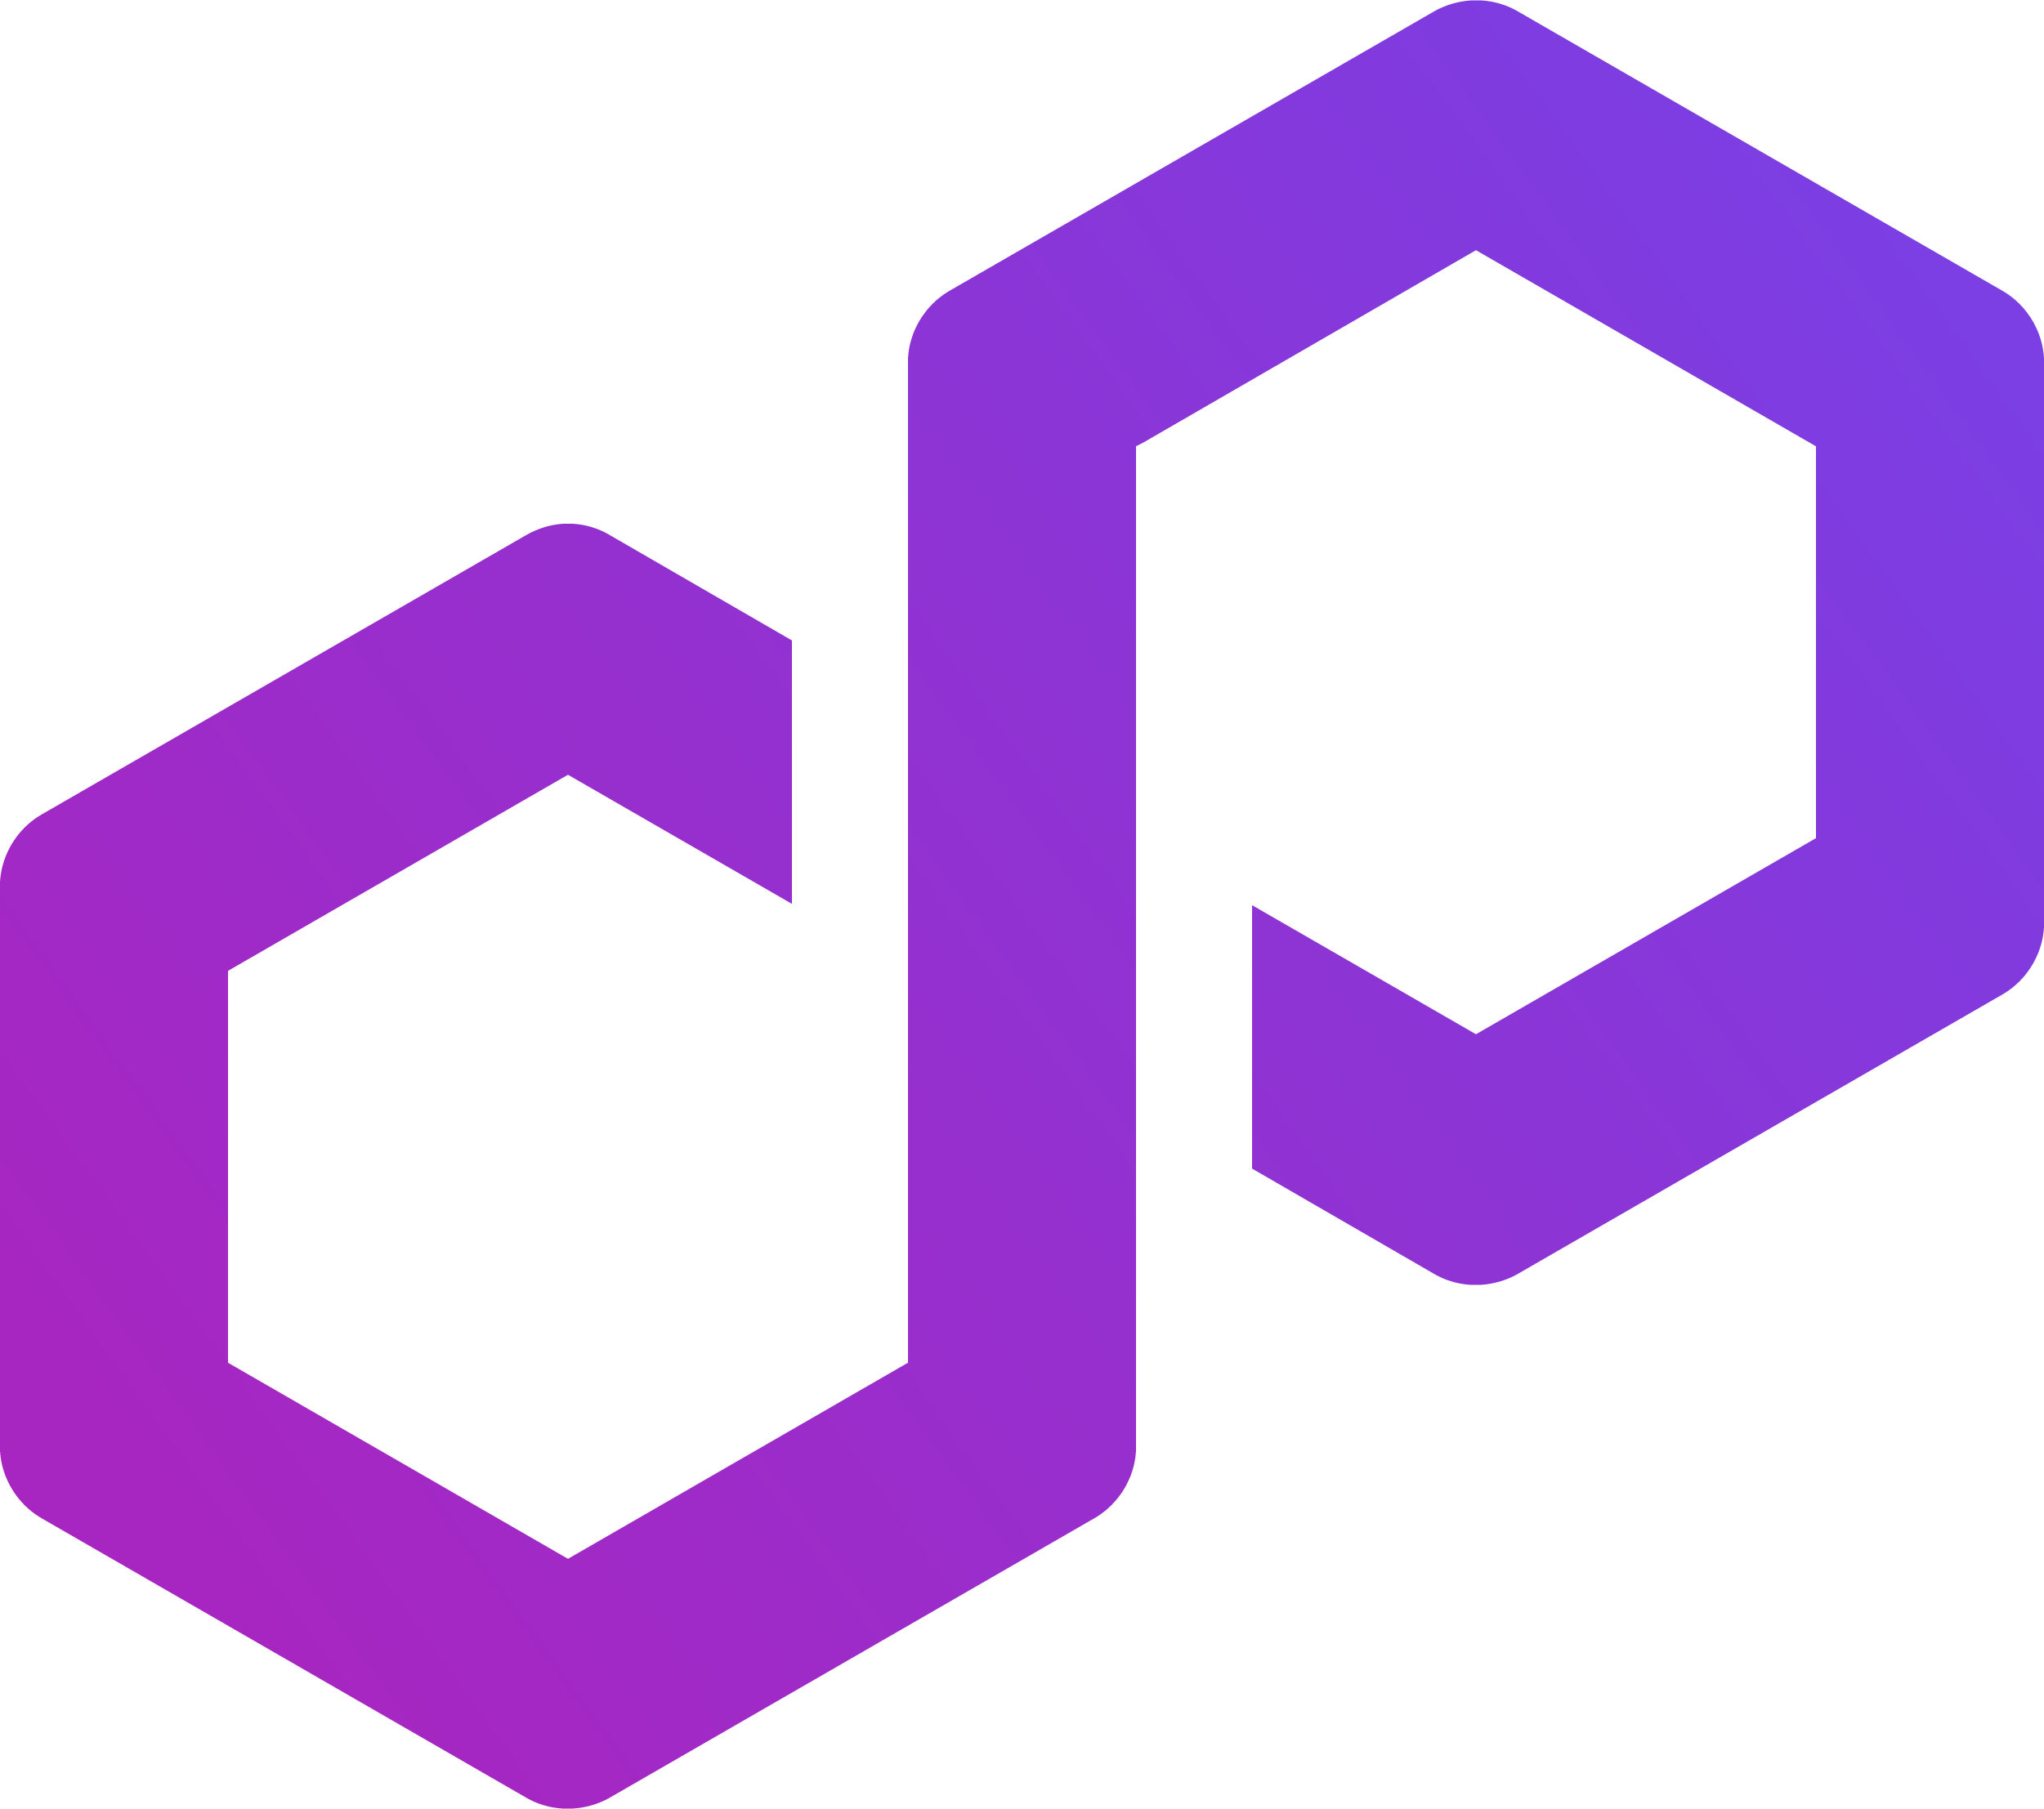 Polygon Logo